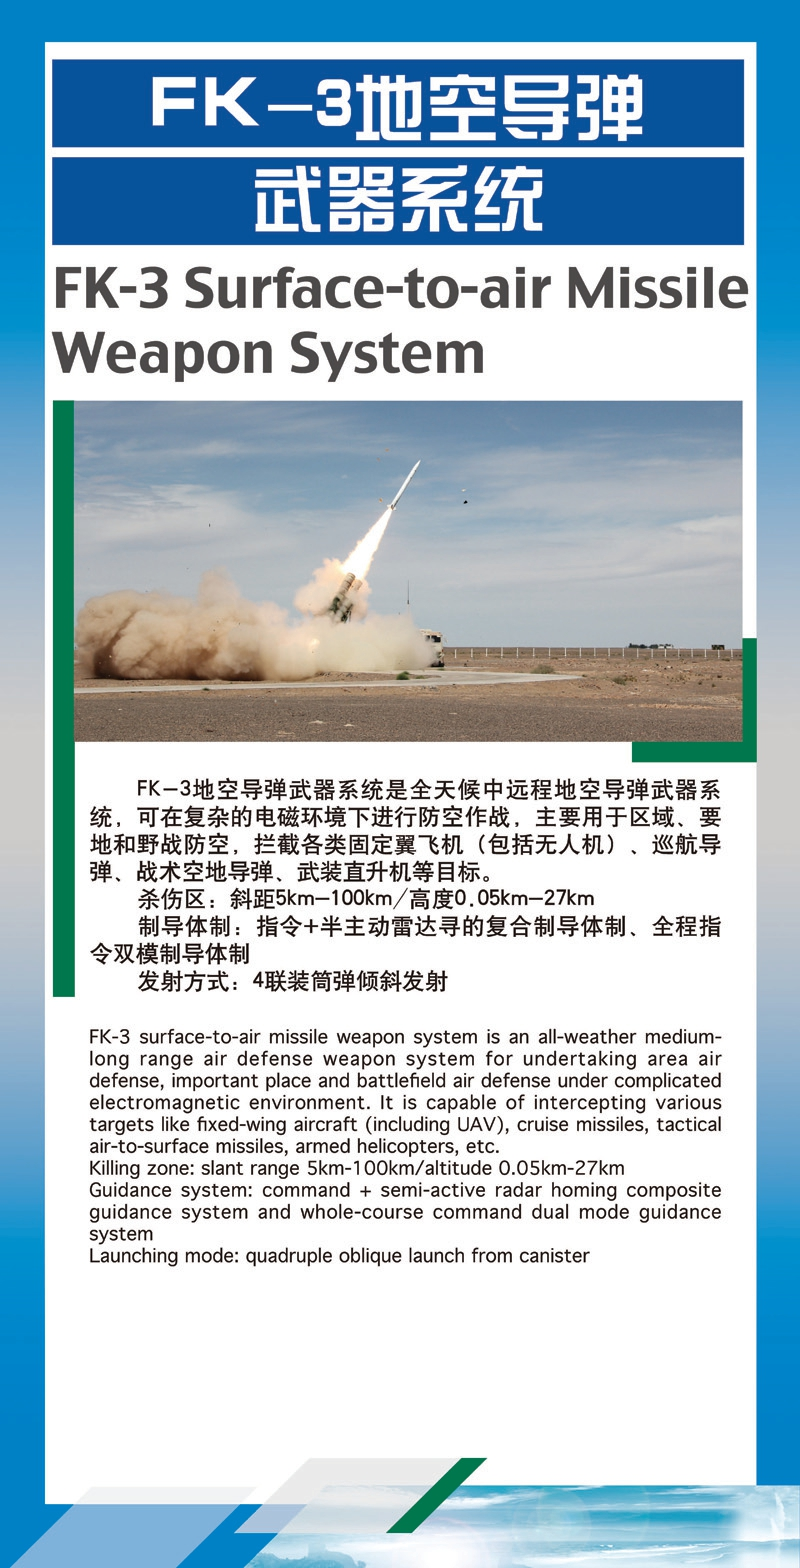 FK-3武器系统 图源：中国航天科工集团公司